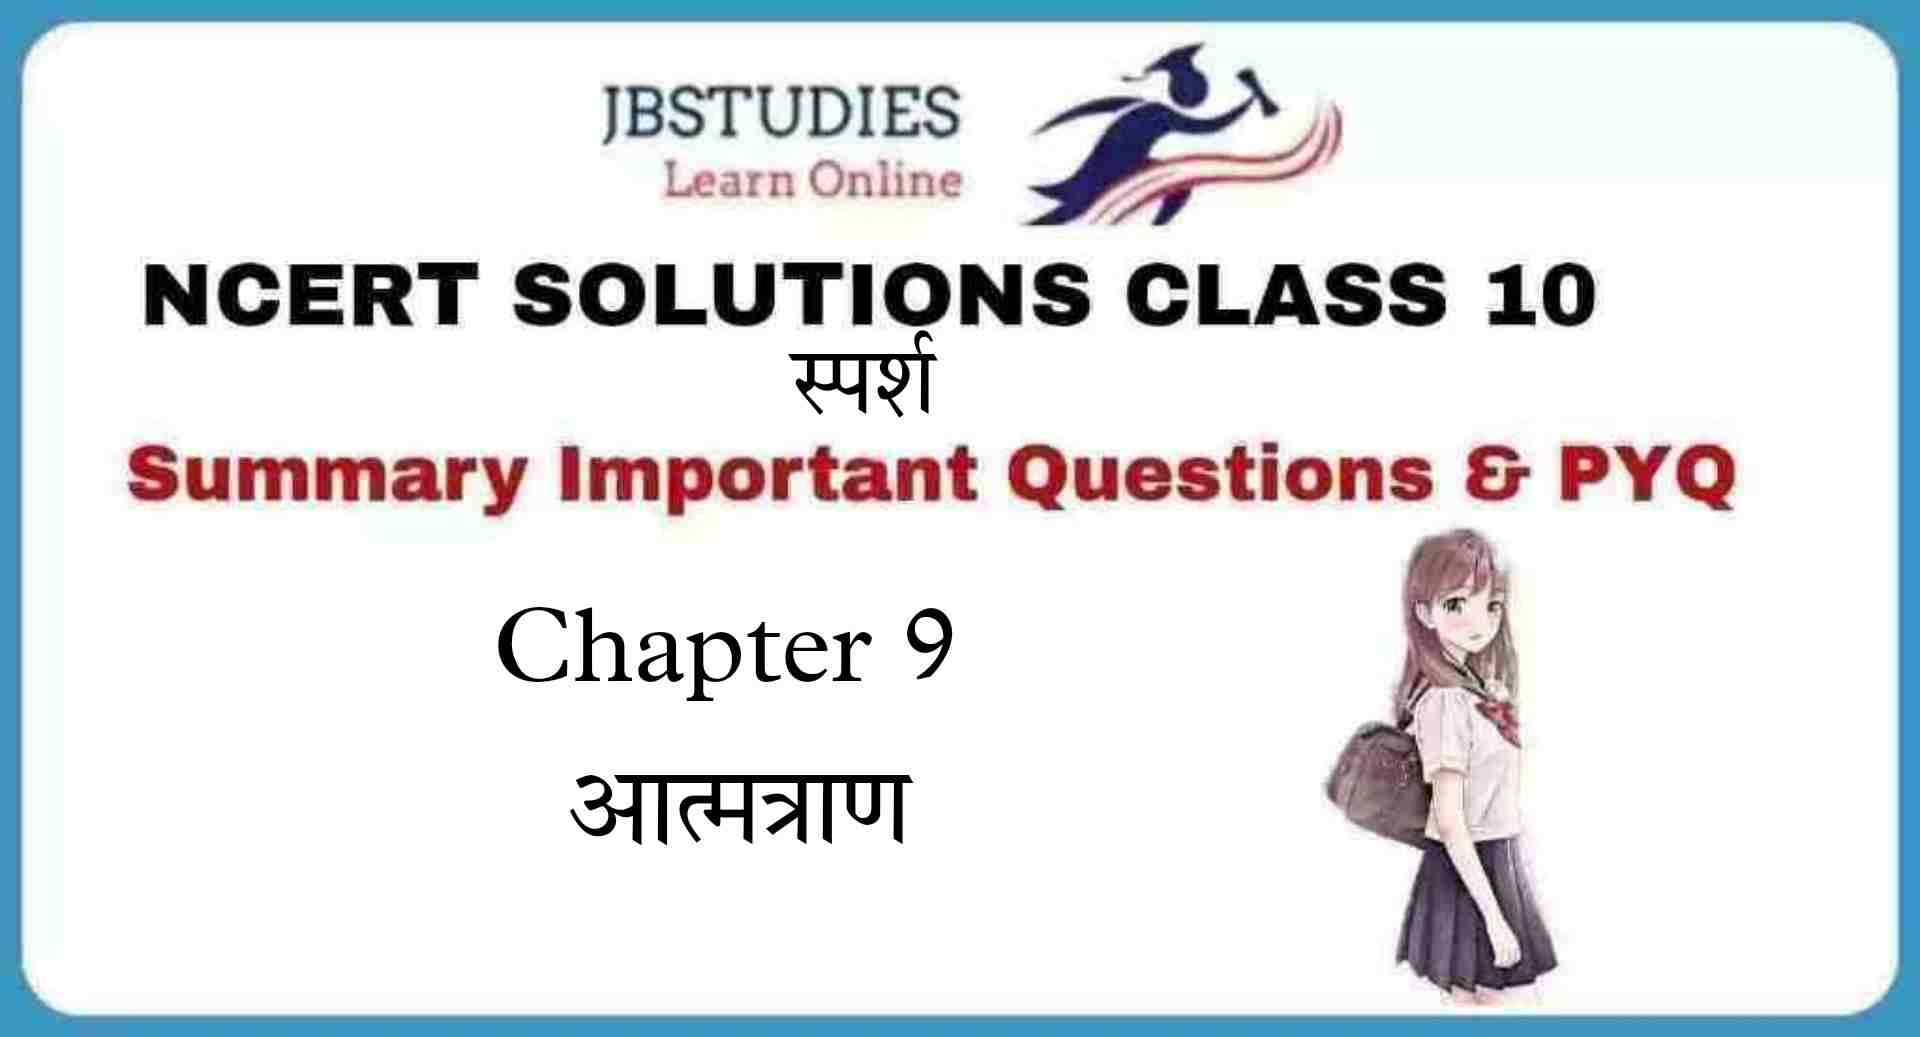 Solutions Class 10 स्पर्श Chapter-9 (आत्मत्राण)